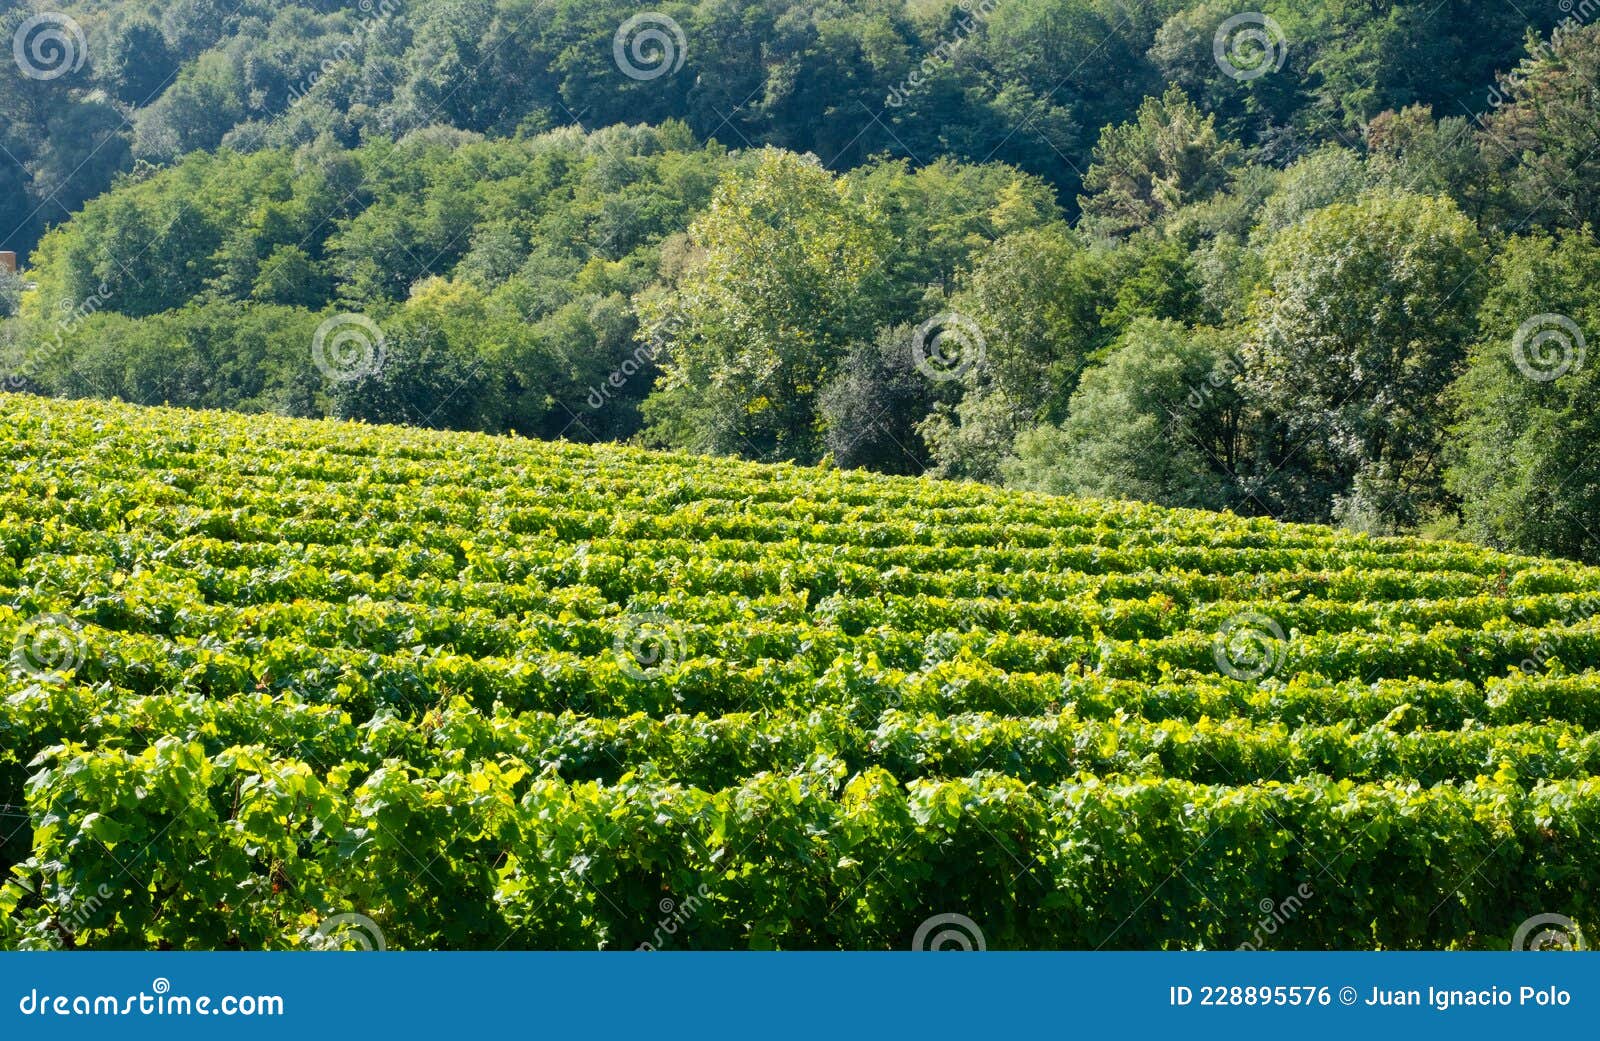 vineyards for the production of txakoli in the talaia mountain, town of zarautz, basque country